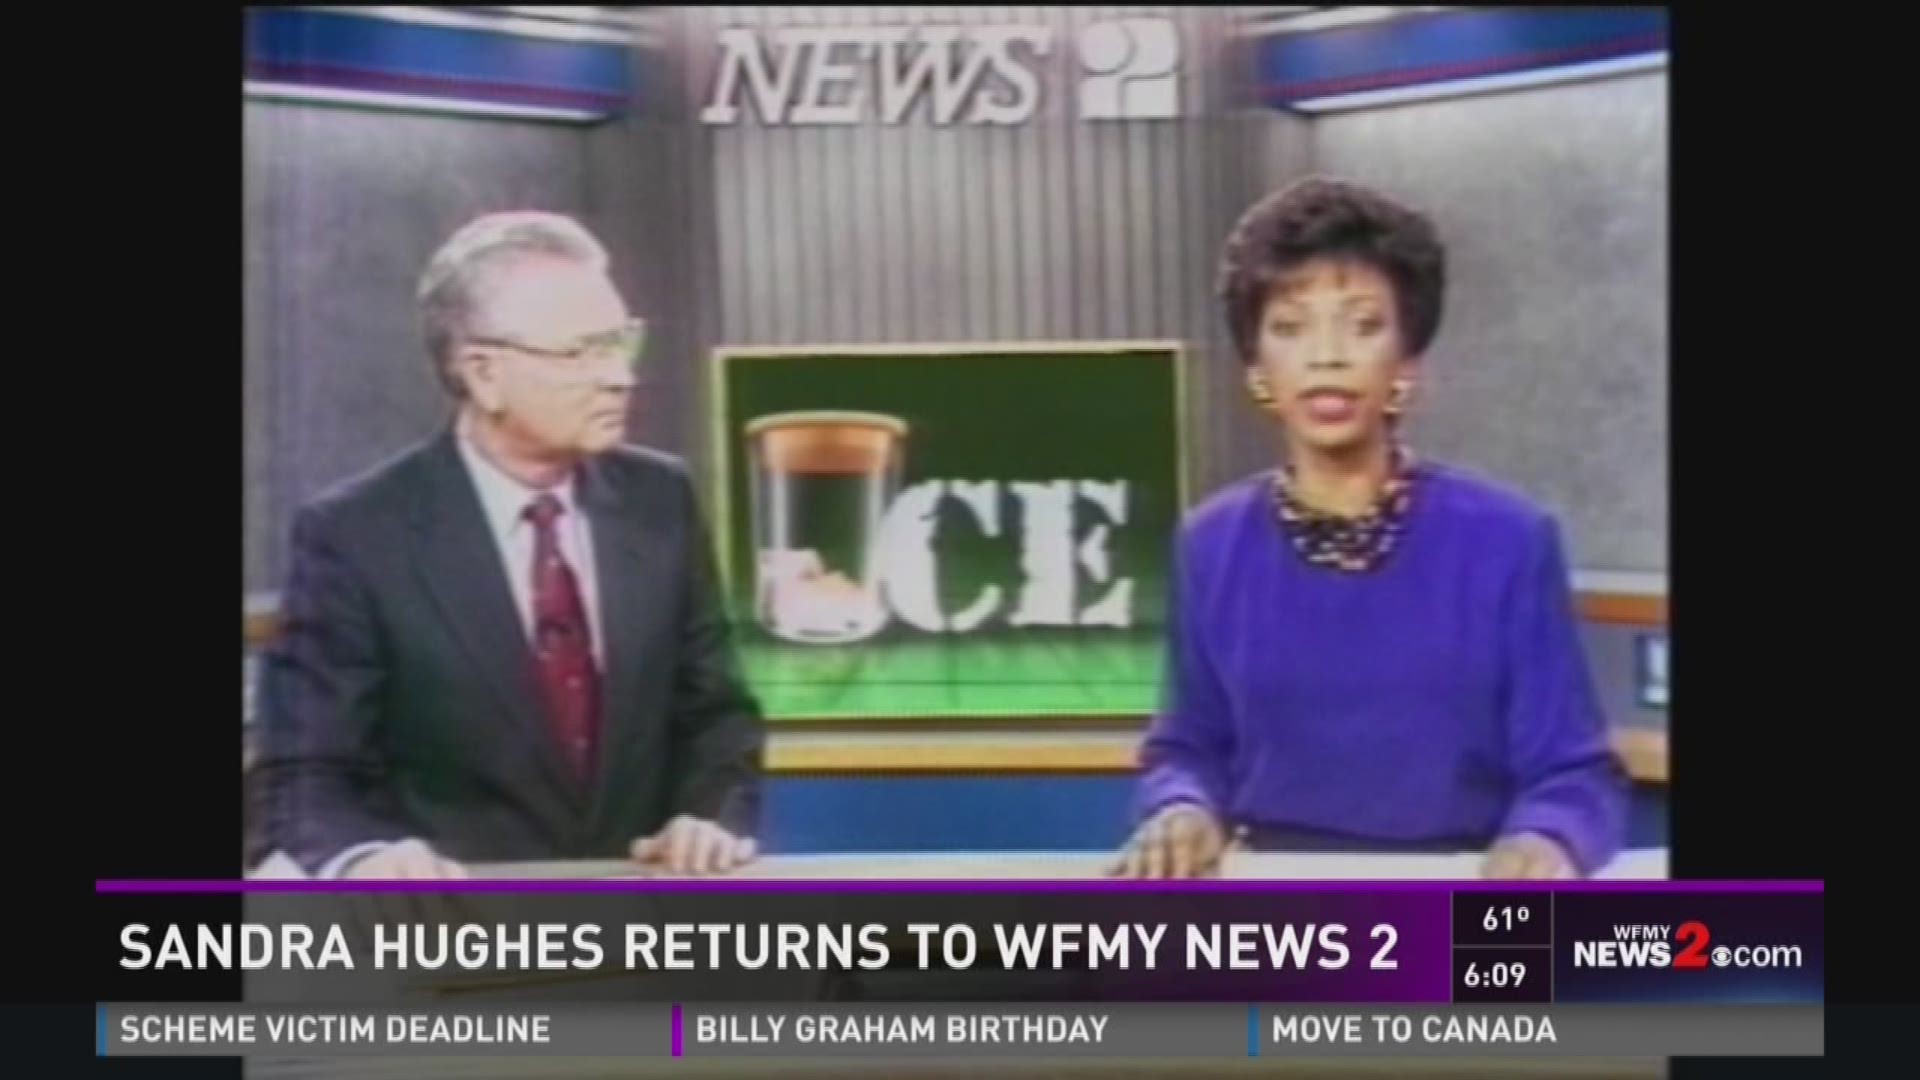 Iconic News Anchor Sandra Hughes Returns to WFMY News 2